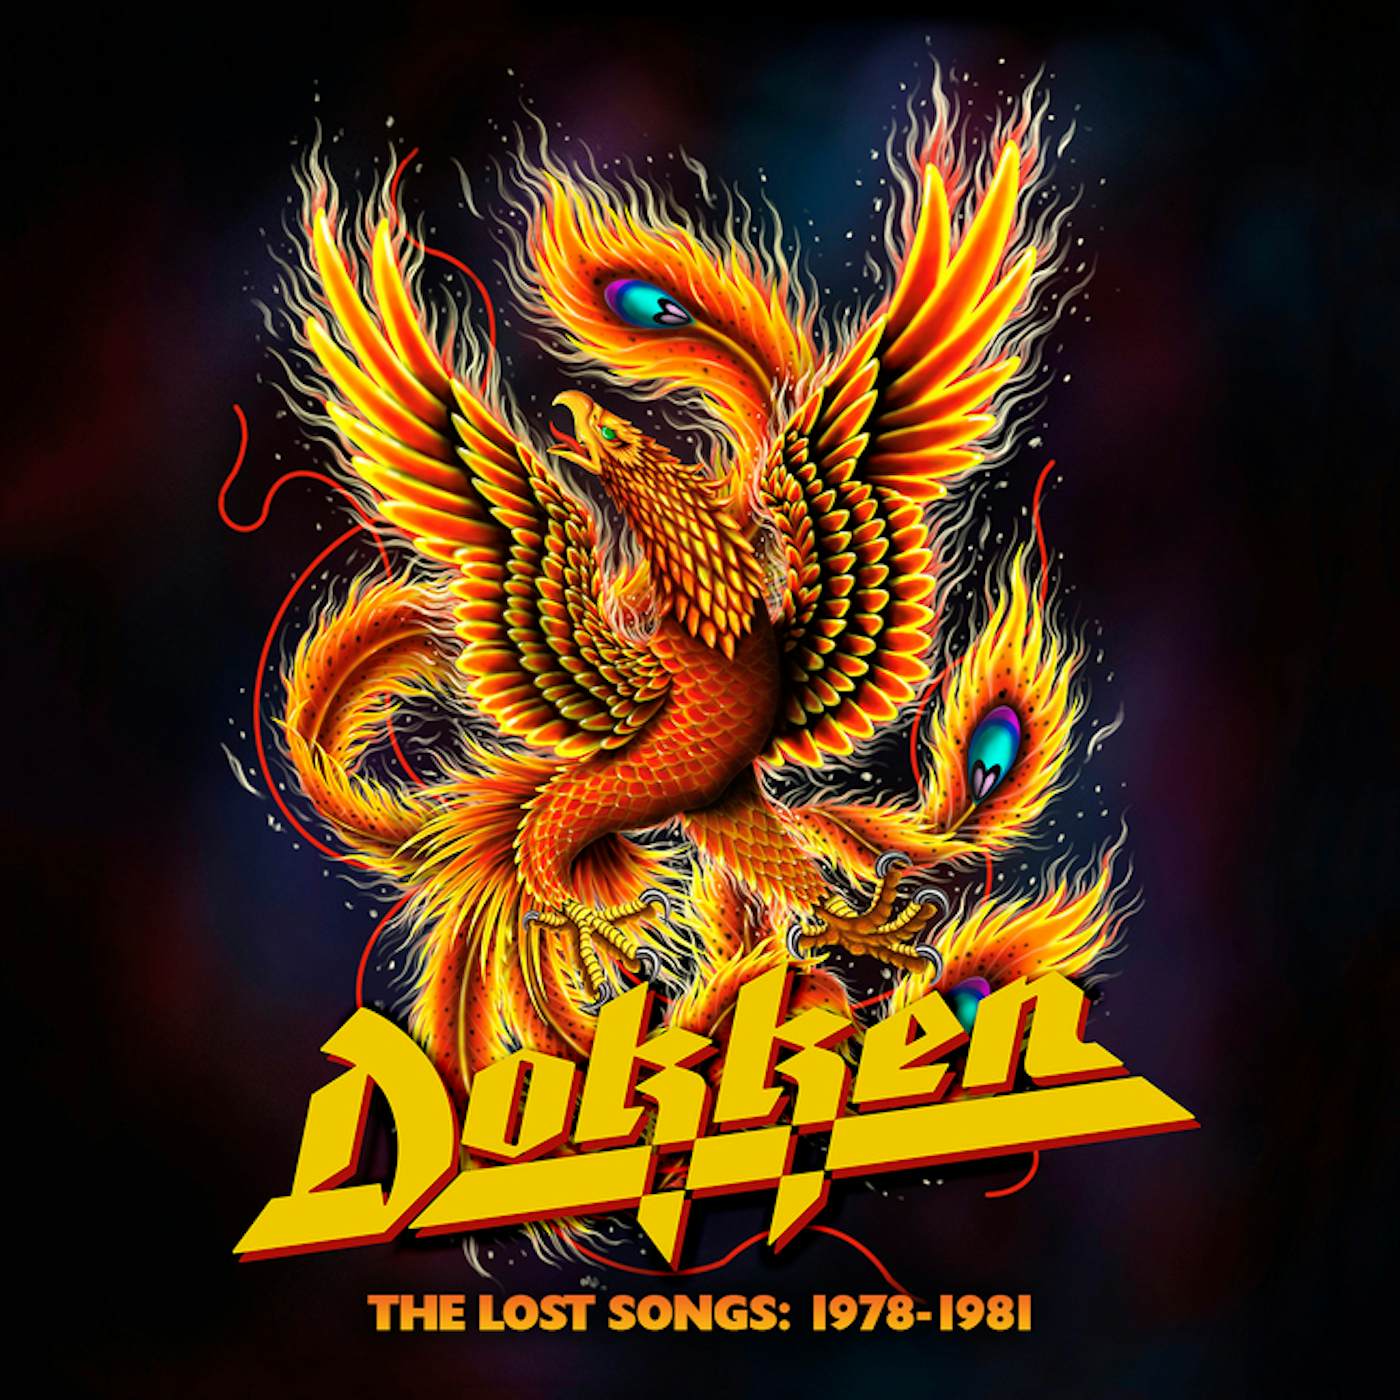 Dokken LOST SONGS: 1978-1981 CD